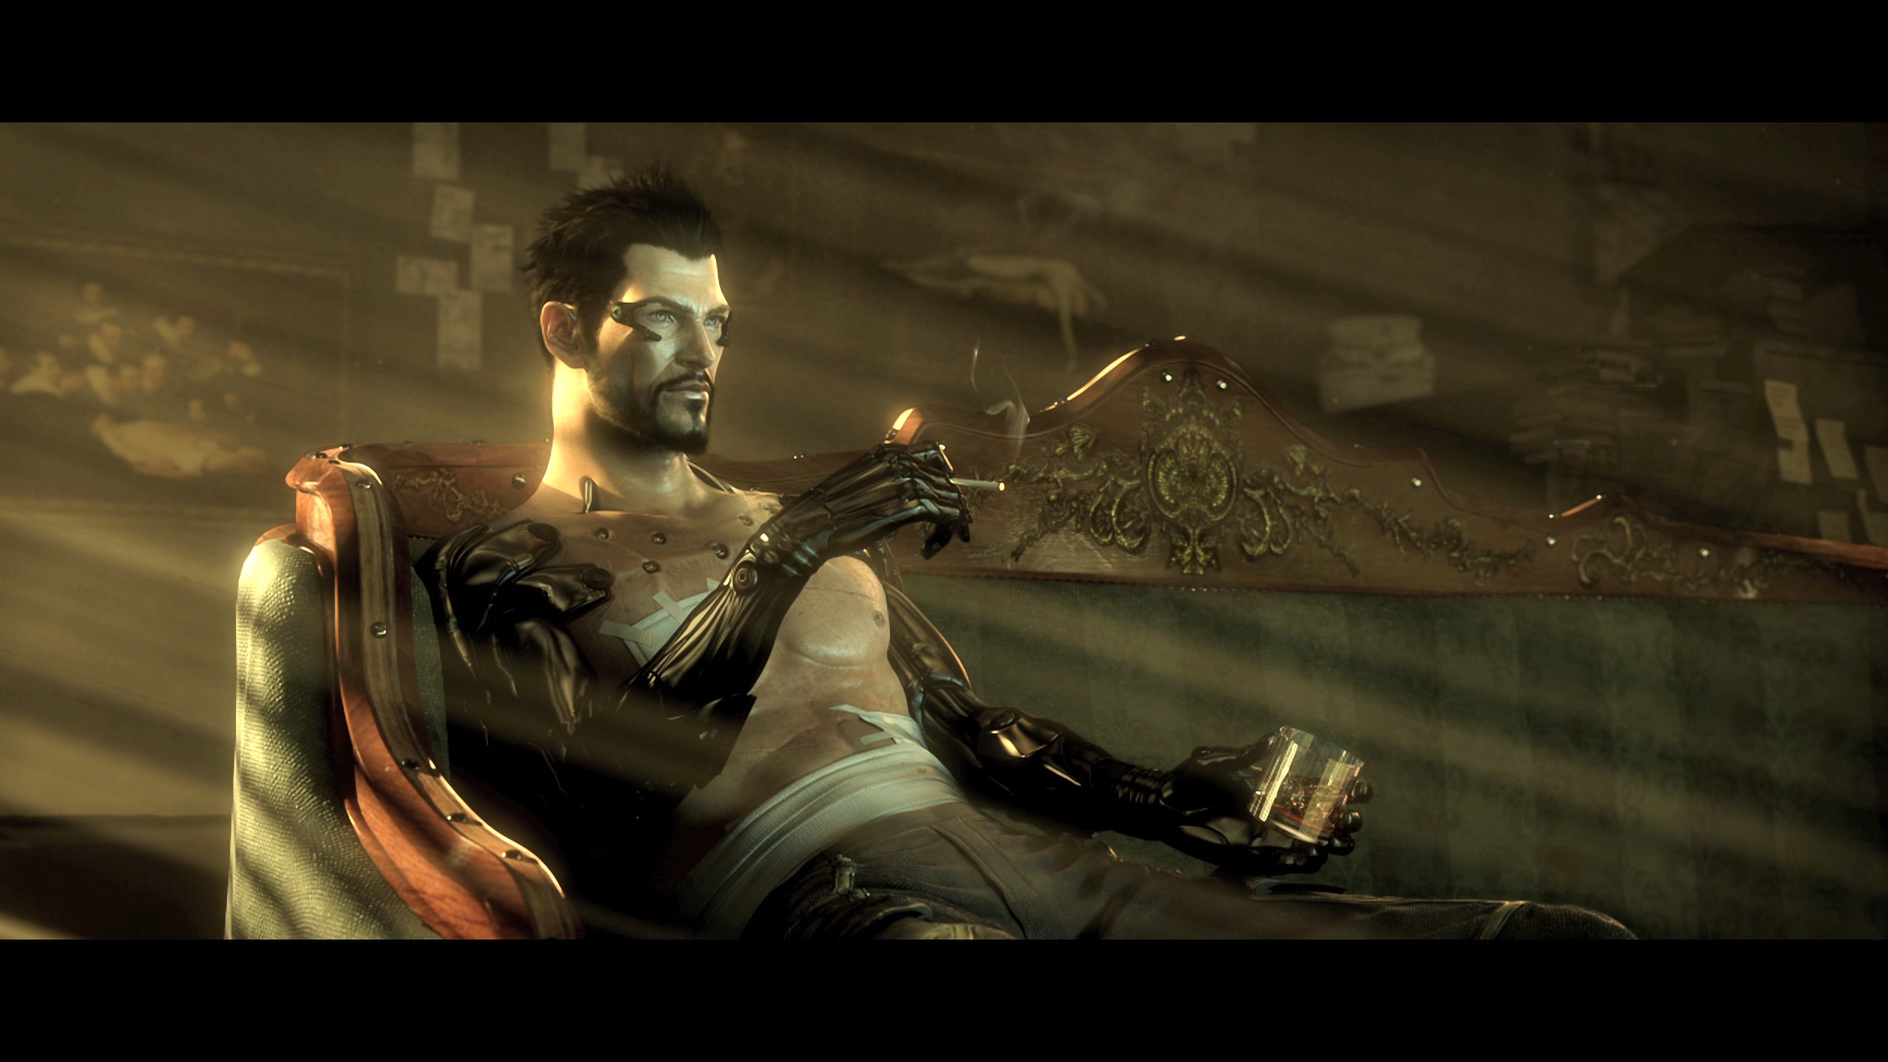 Amazing Deus Ex Pictures & Backgrounds